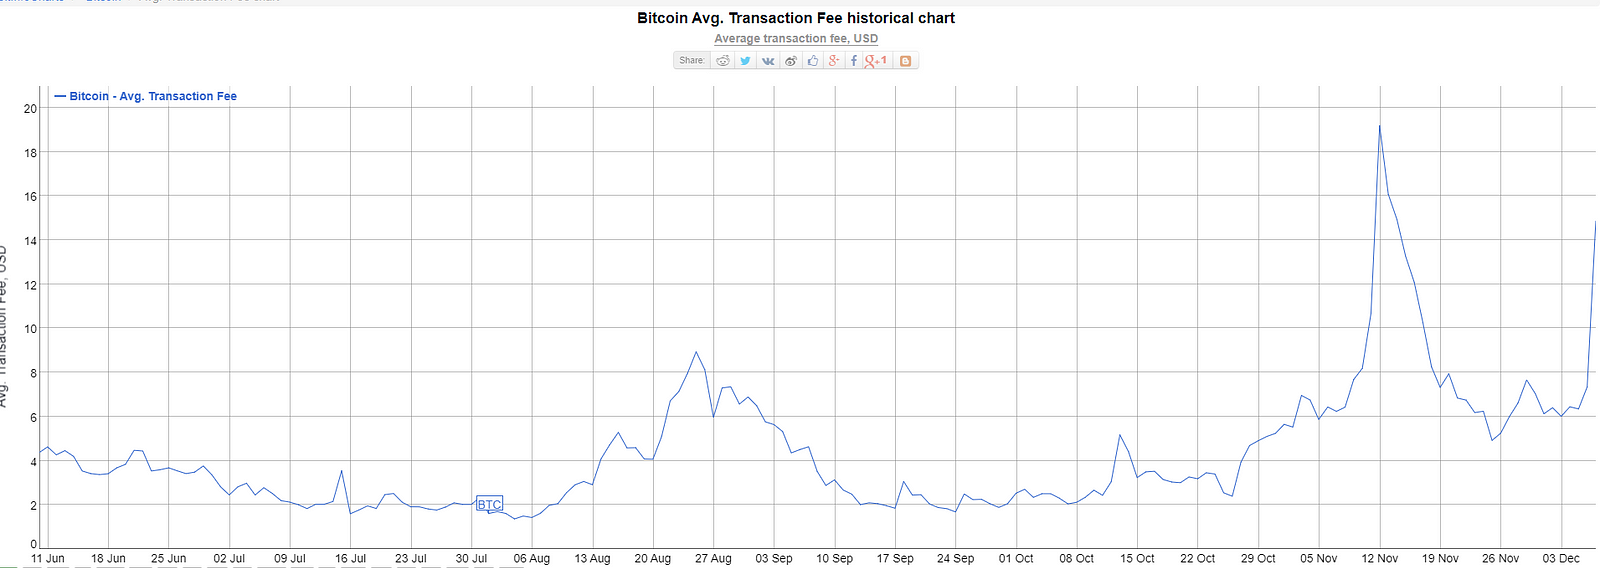 bitcoin cash exchange prices